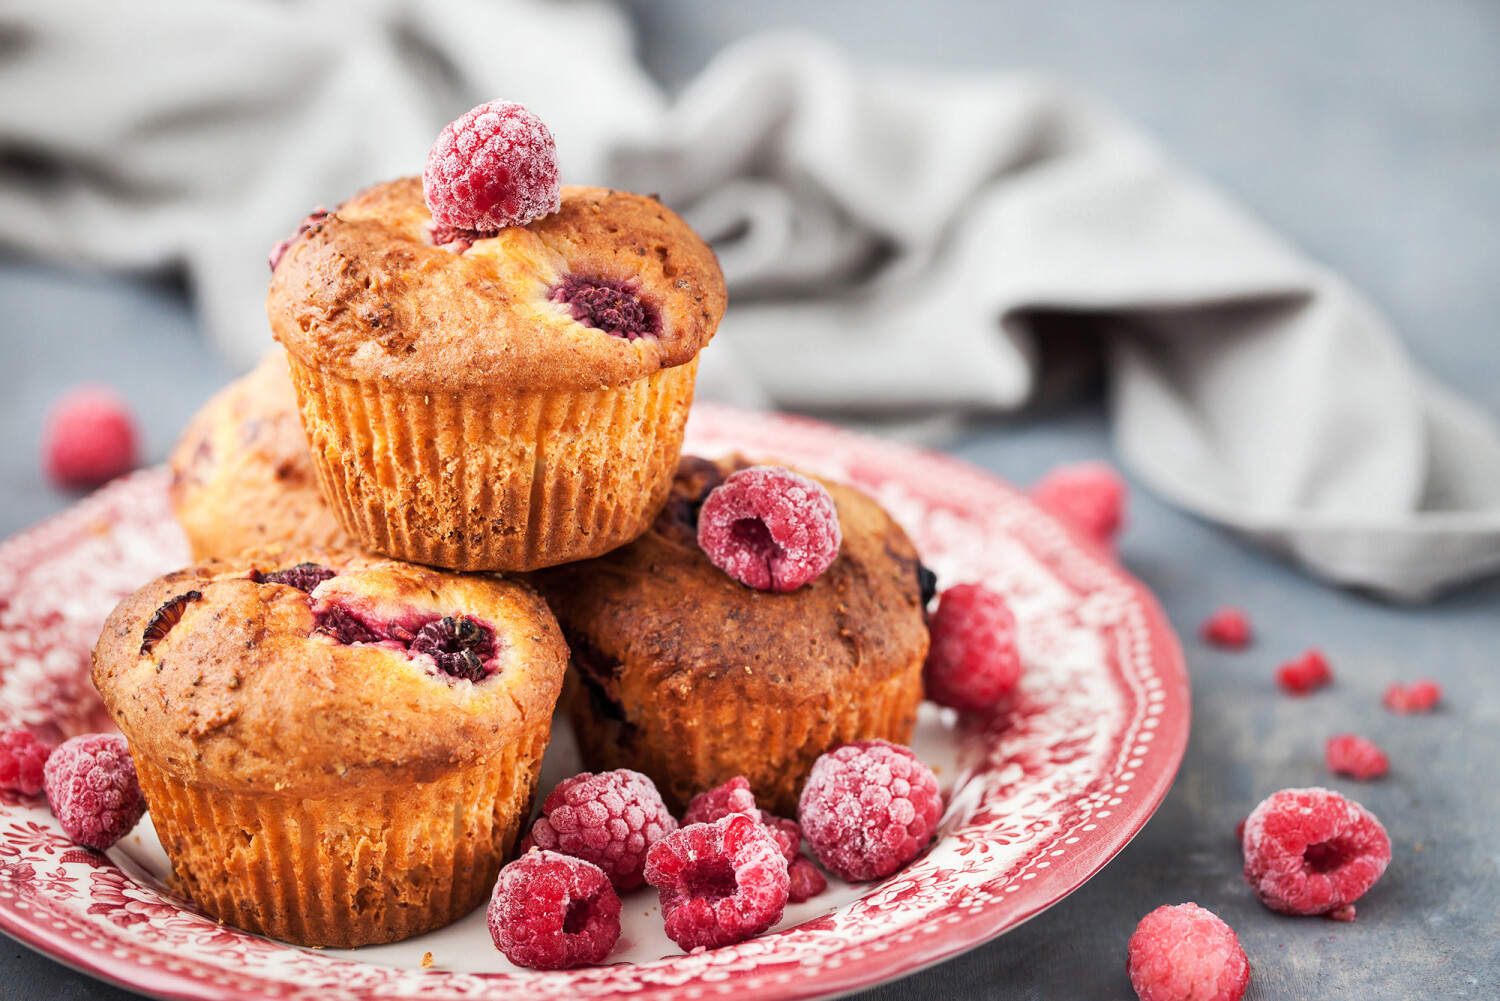 Raspberry muffins with white chocolate